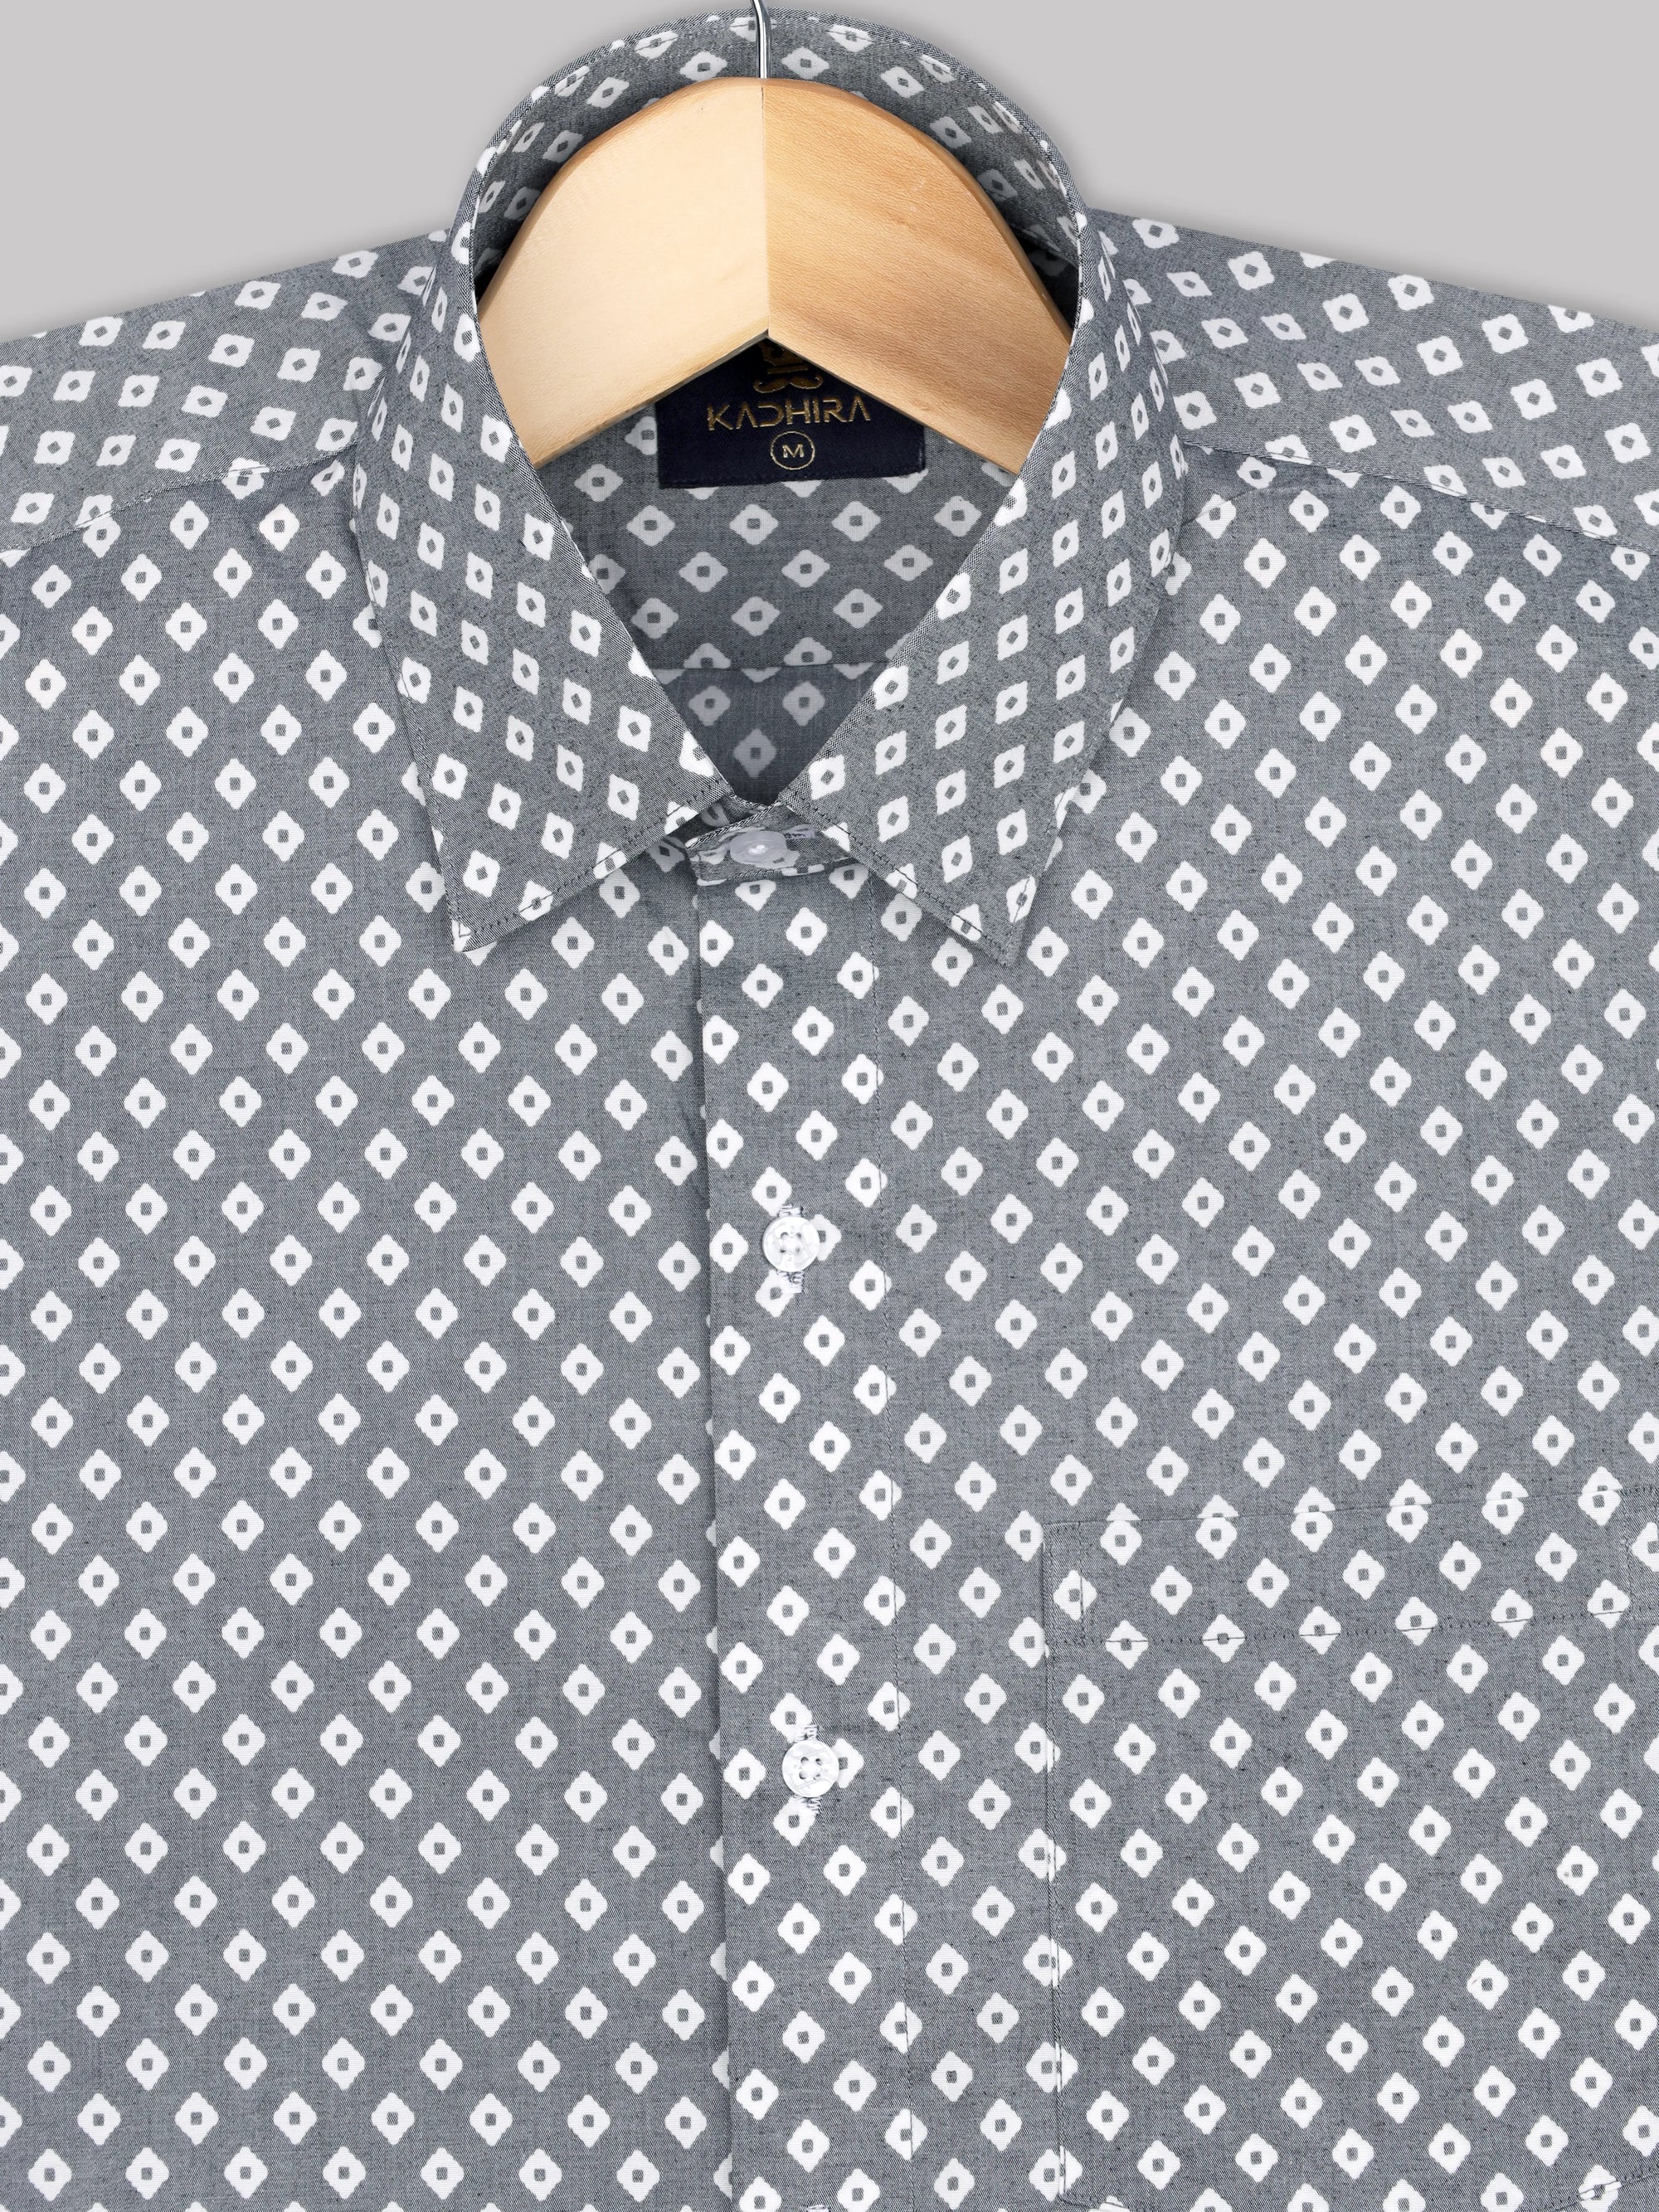 Tundora Gray With White Square Pattern Super Premium Cotton Shirt-[ON SALE]